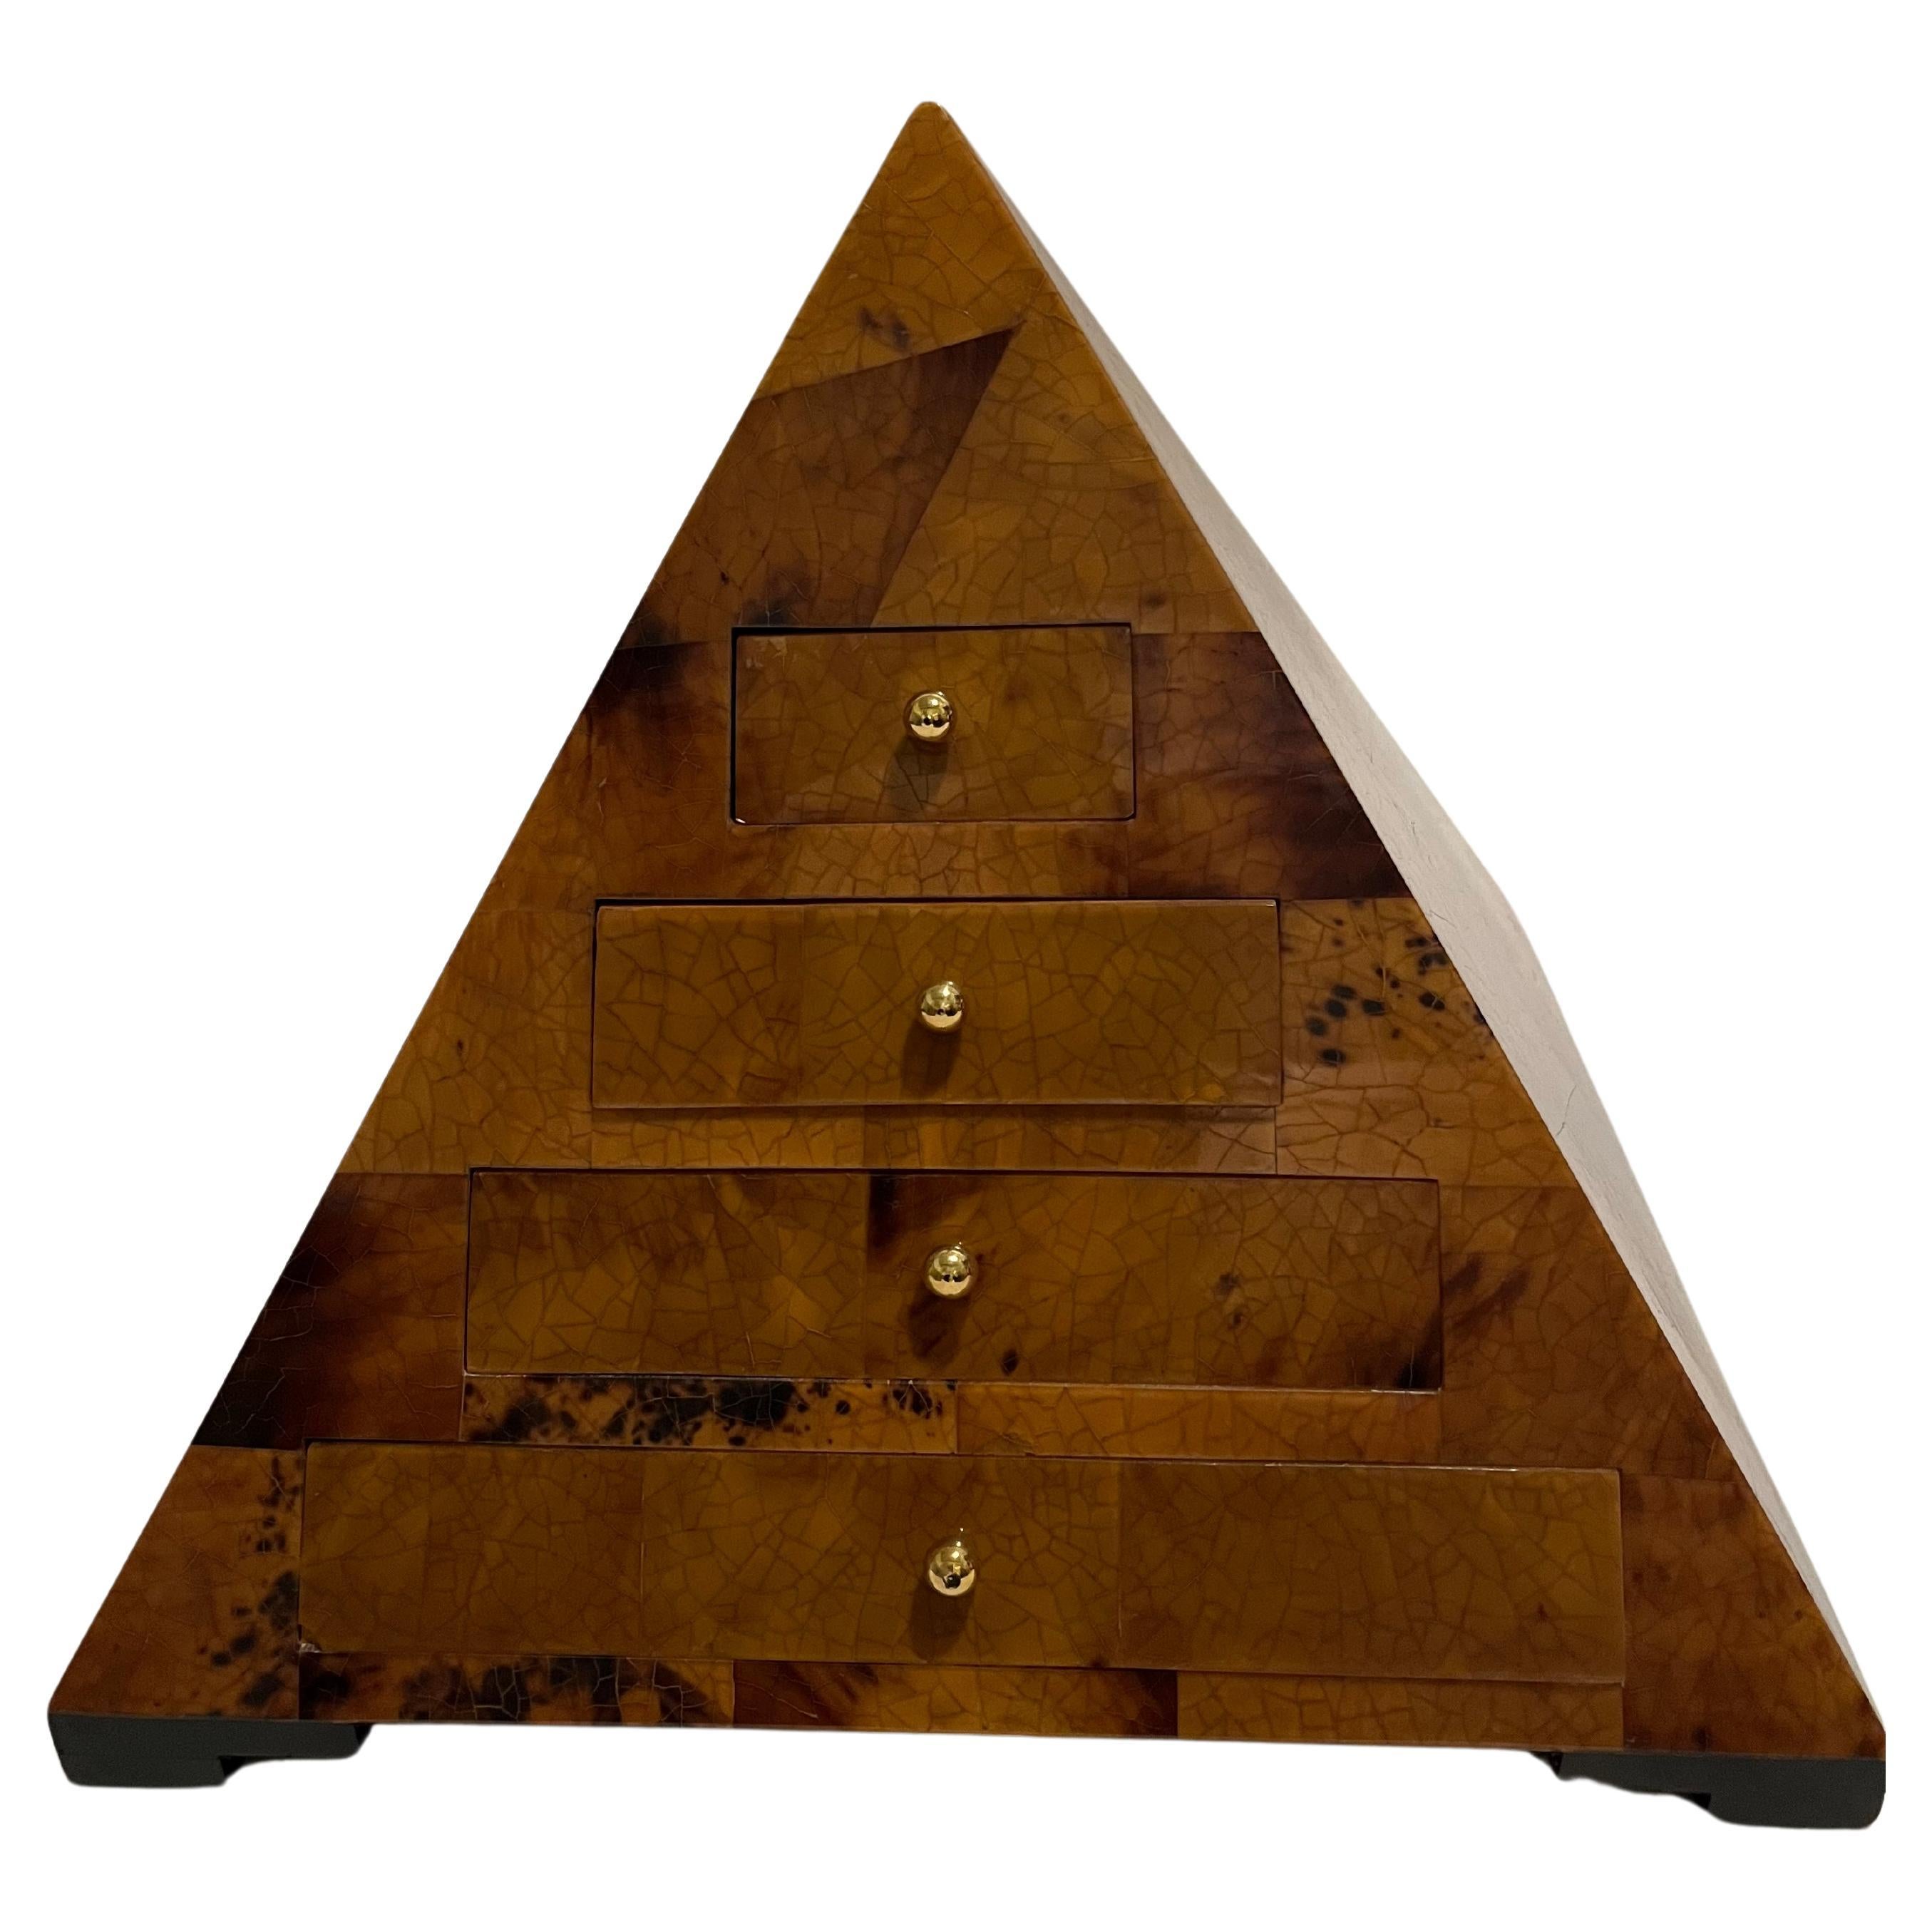 Boîte pyramidale attribuée à Maitland Smith